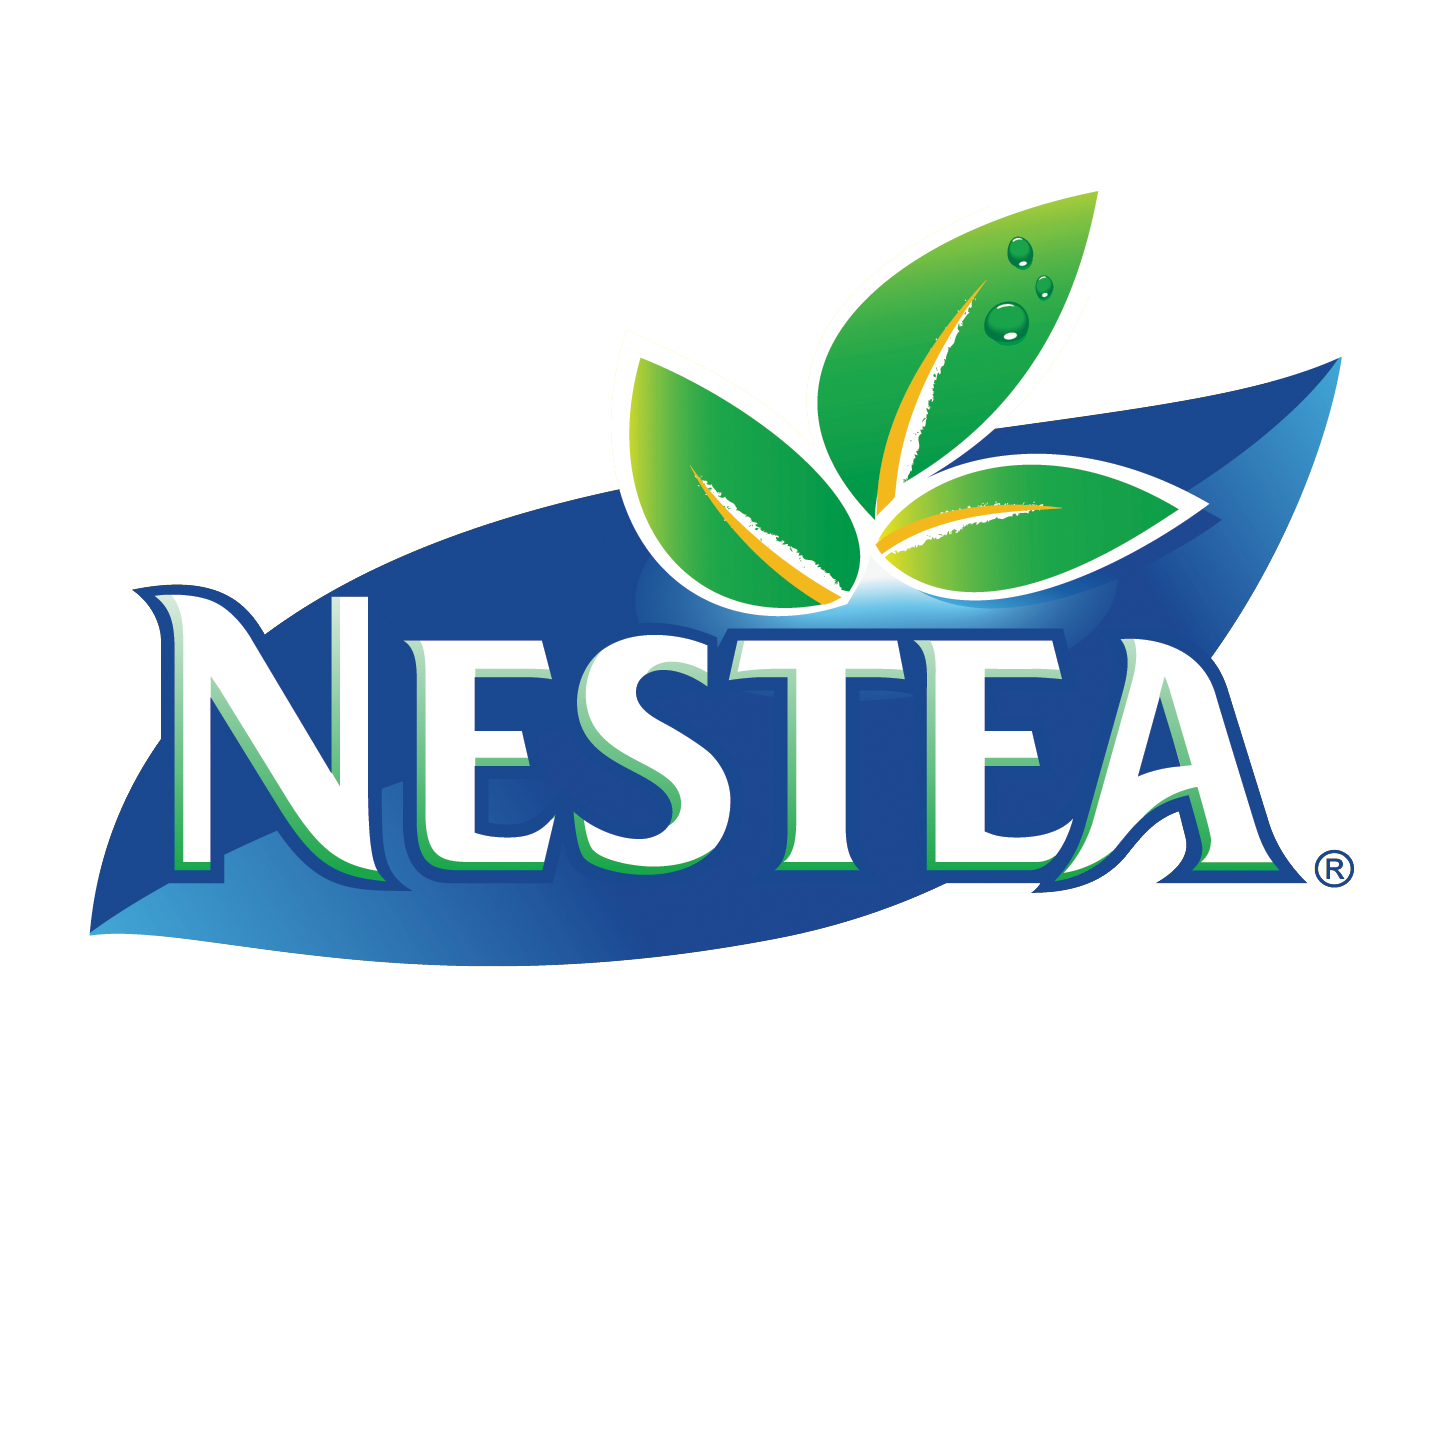 nestea-logo-png-5.png